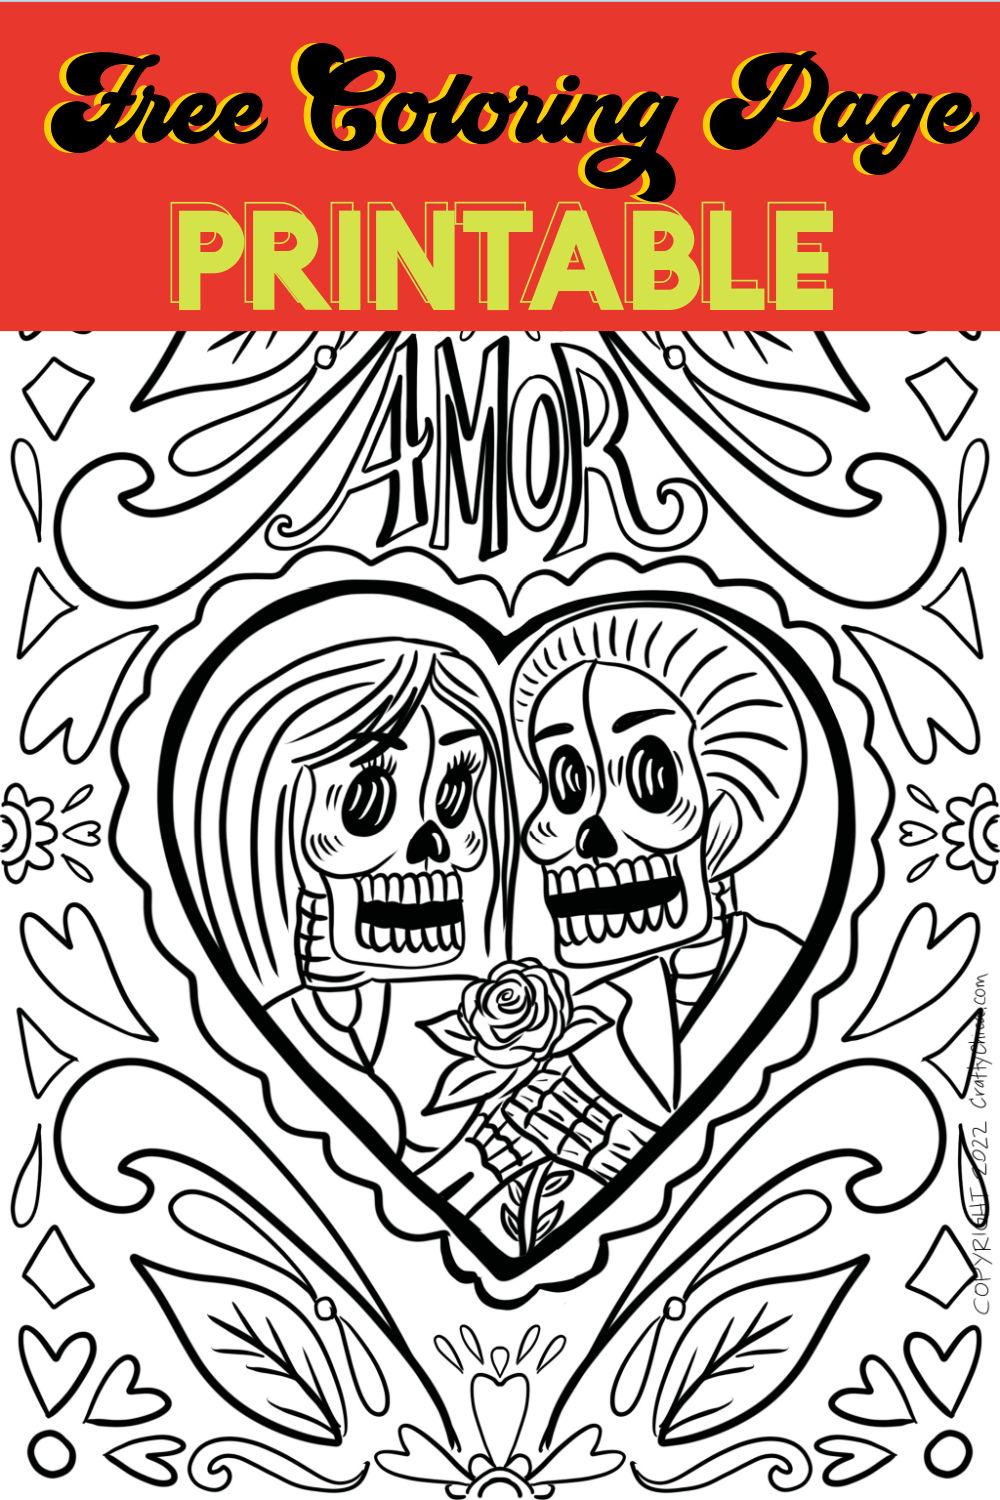 FREE: Muertos Valentine Coloring Page